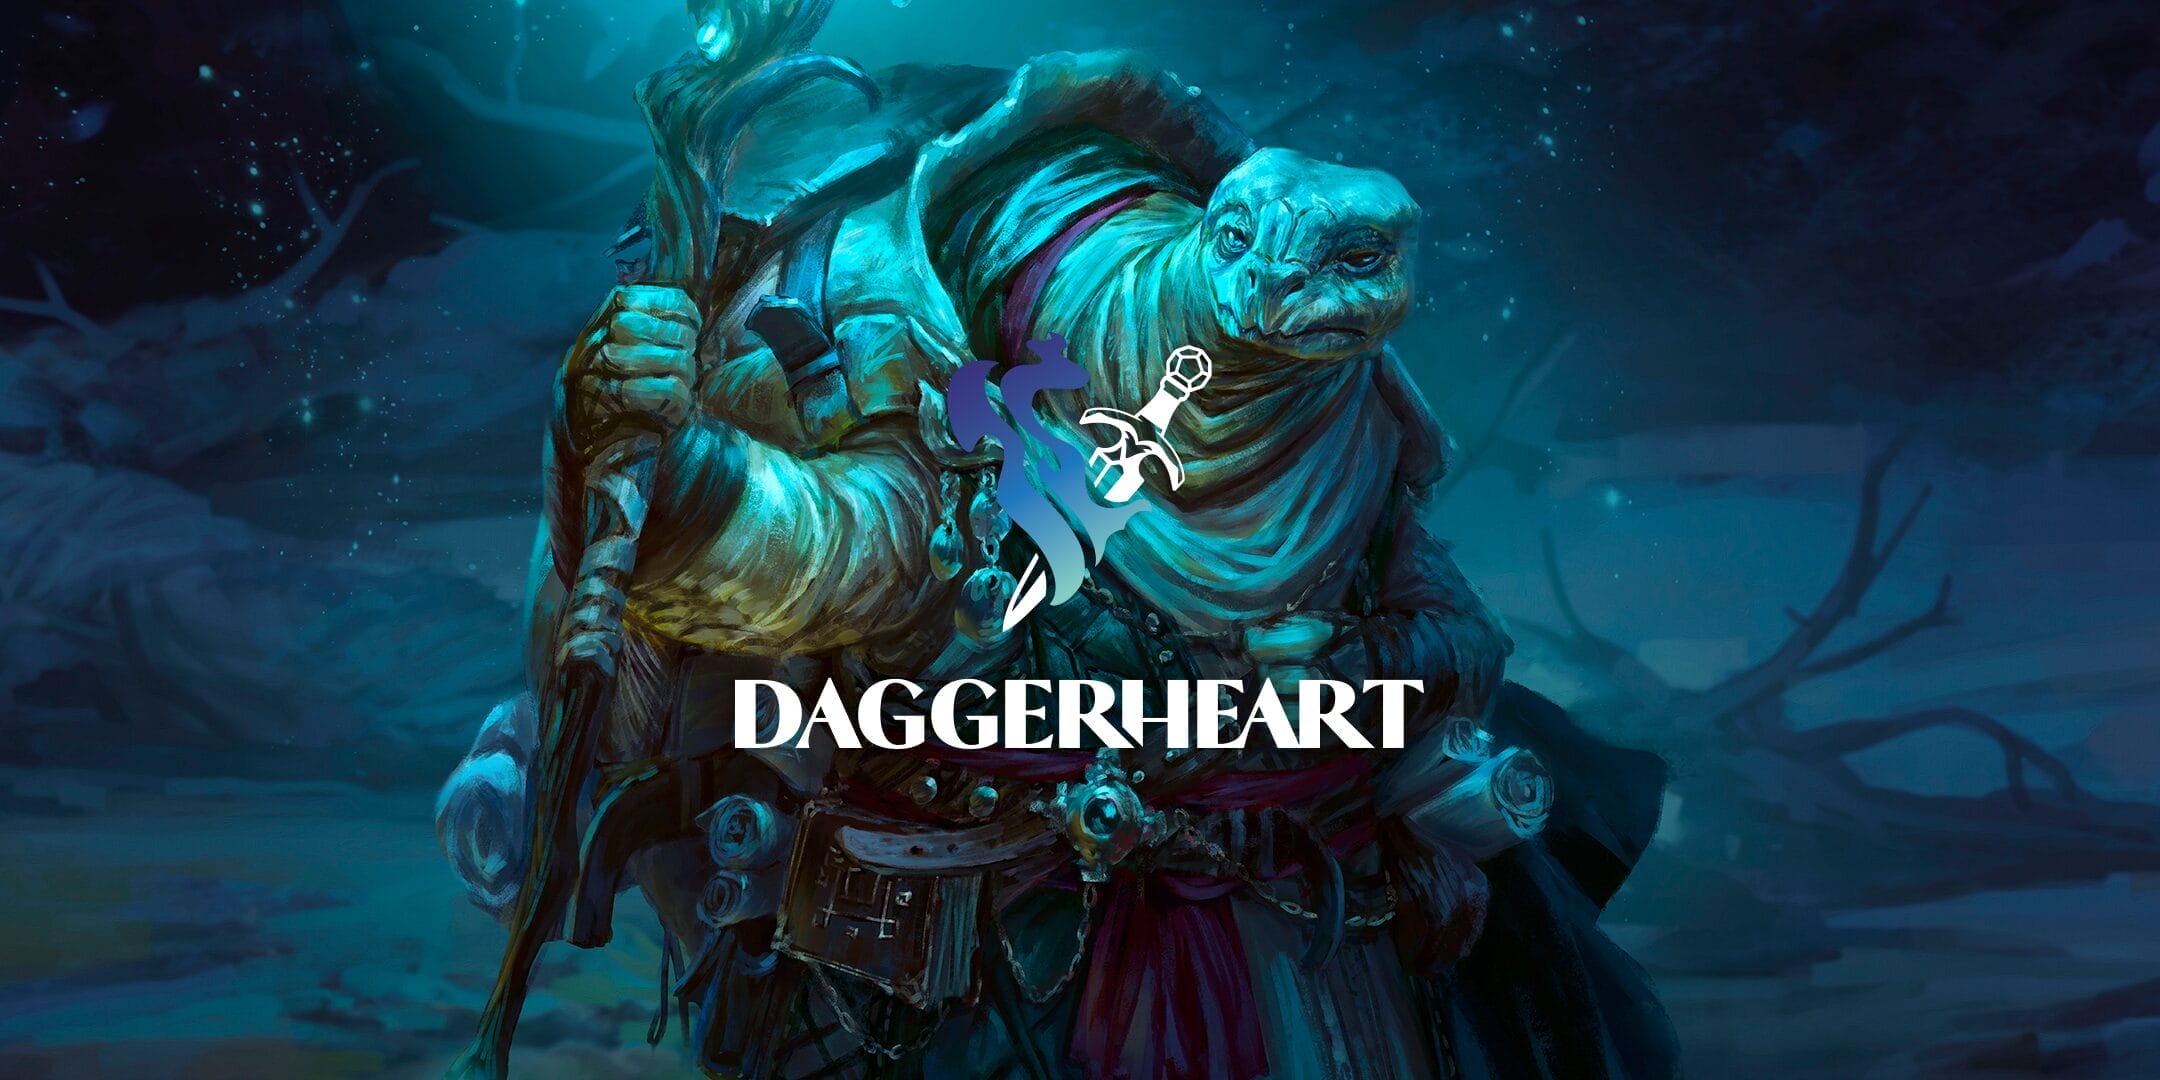 Daggerheart logo and character